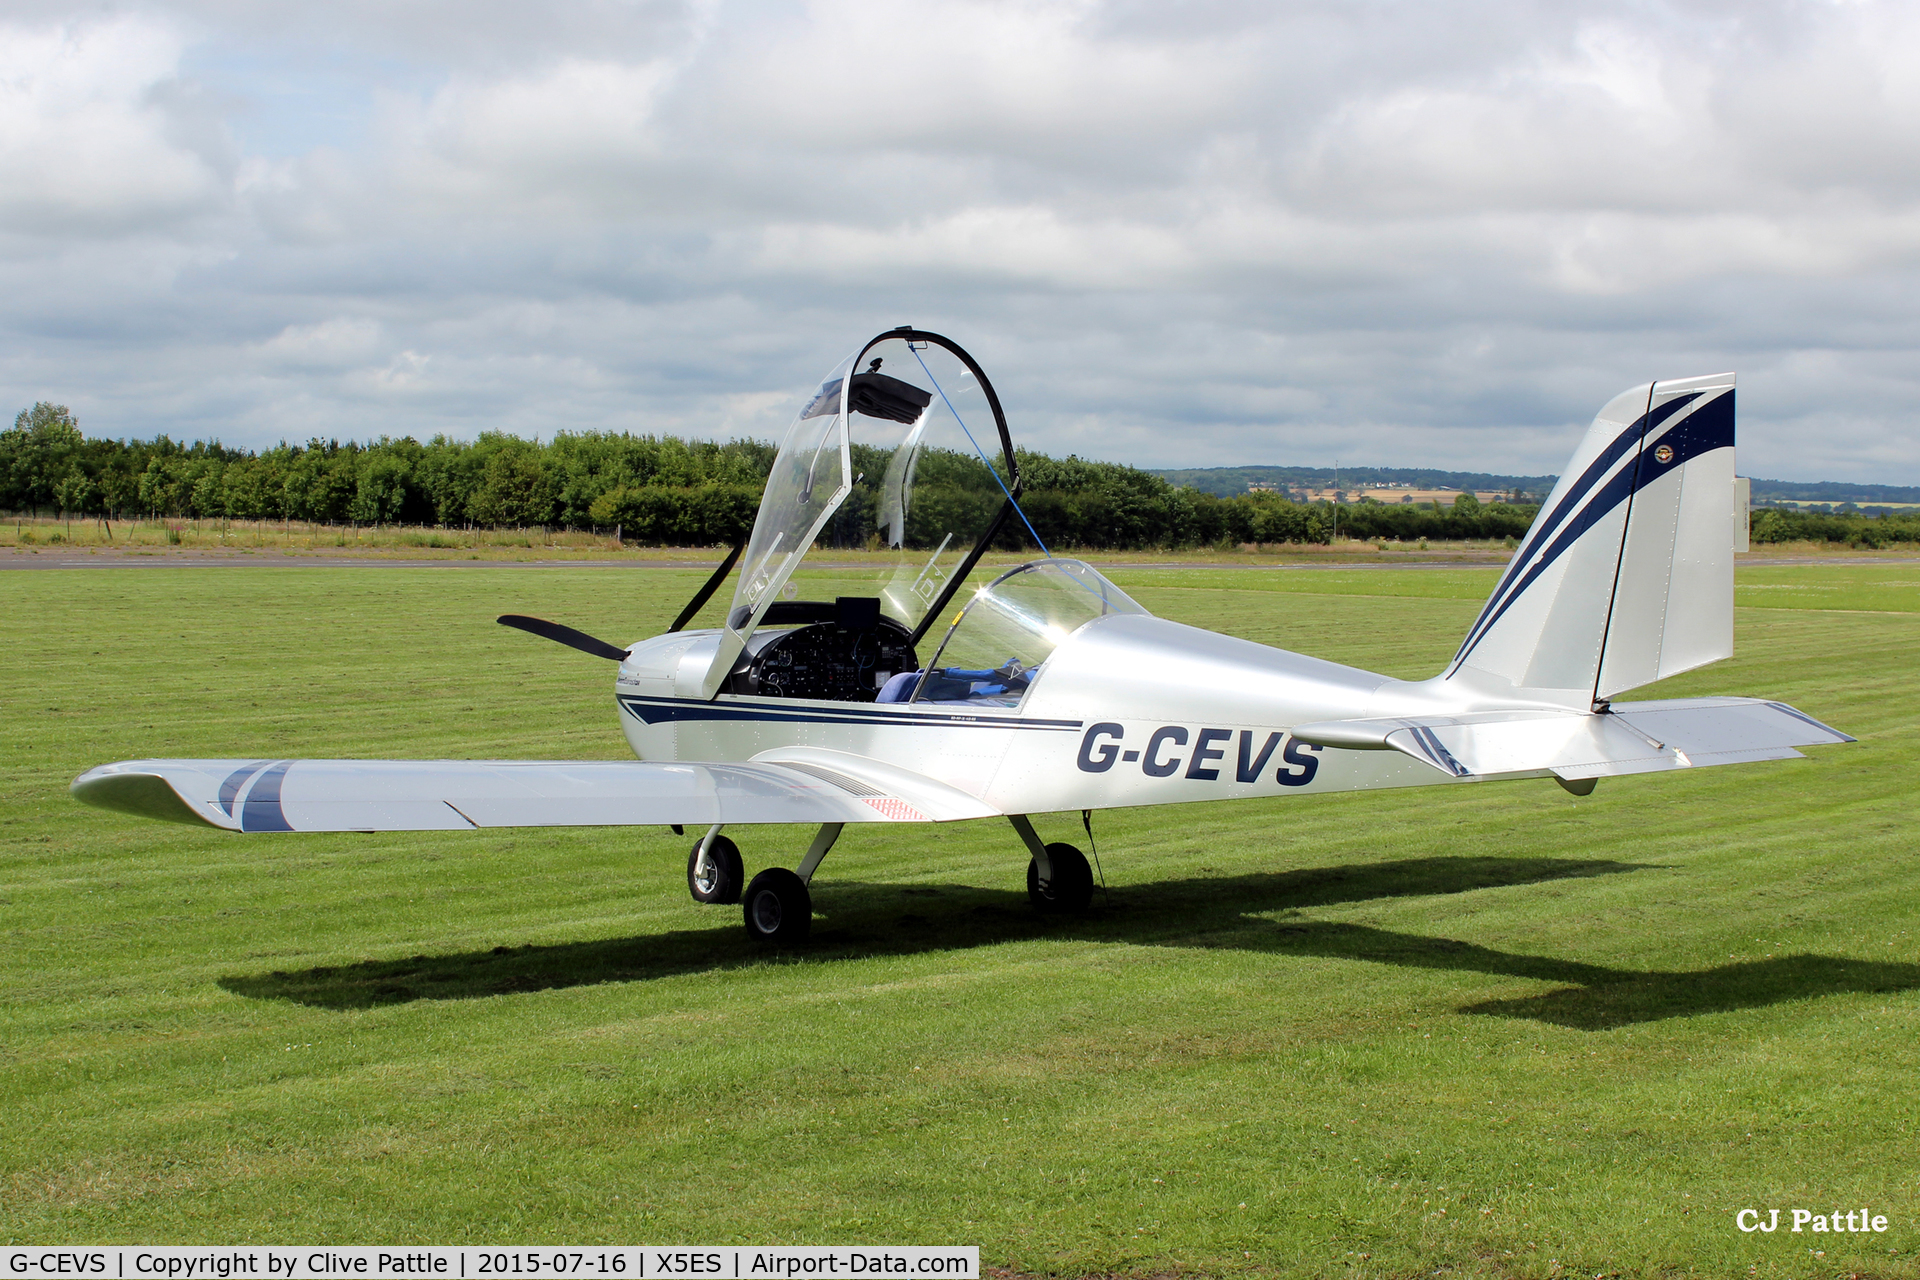 G-CEVS, 2007 Cosmik EV-97 TeamEurostar UK C/N 3102, With based Purple Aviation at Eshott Airfield, Northumberland, UK.